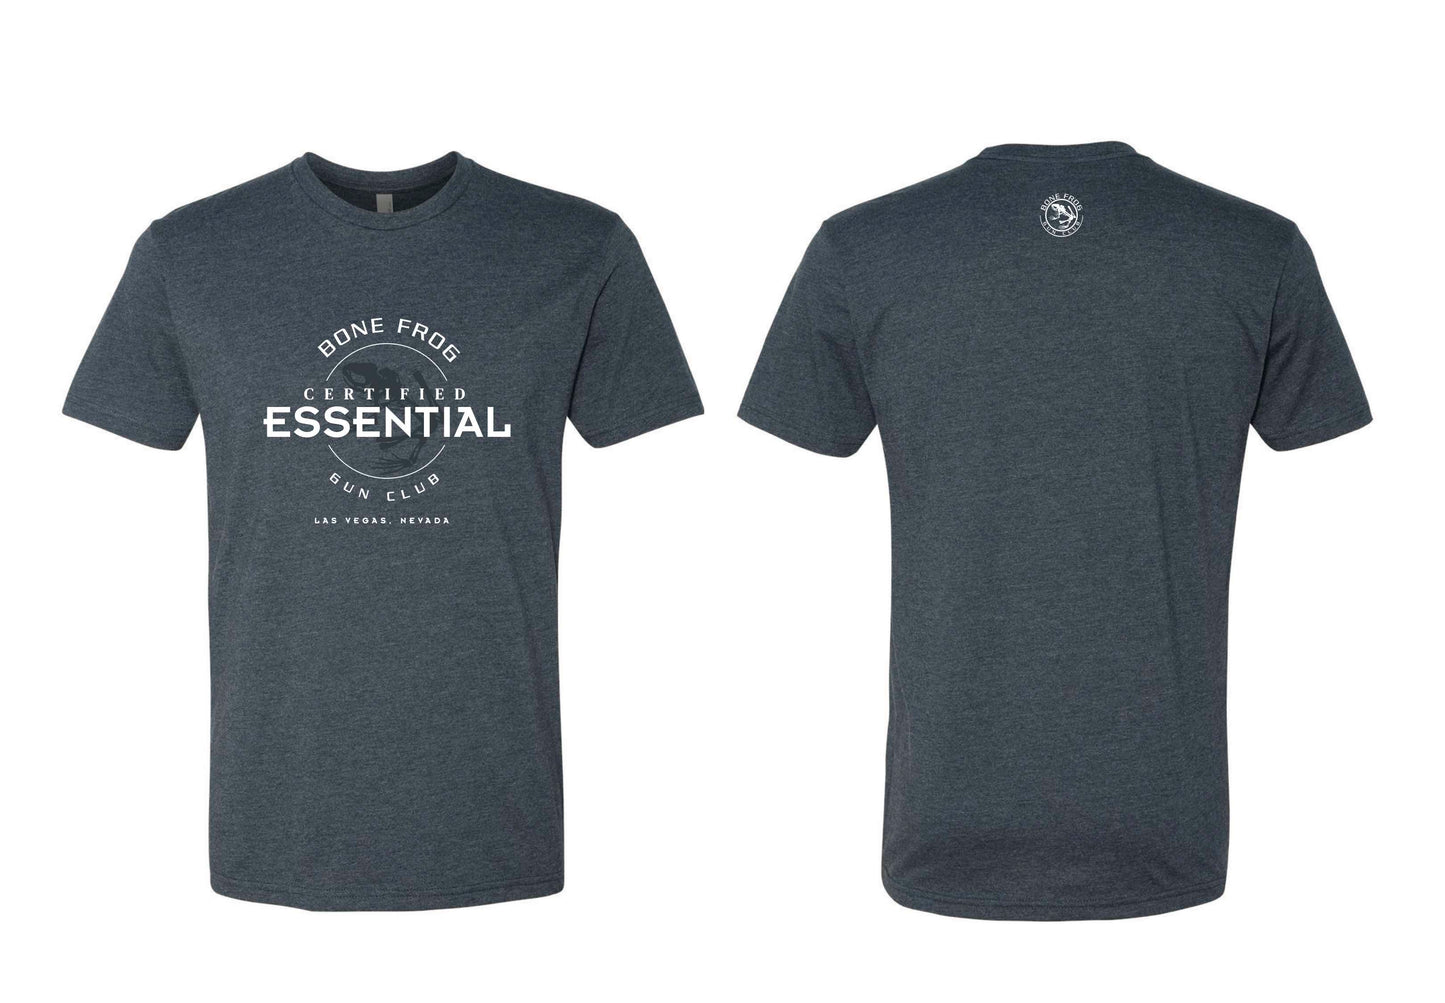 BFGC Certified Essential T-Shirt